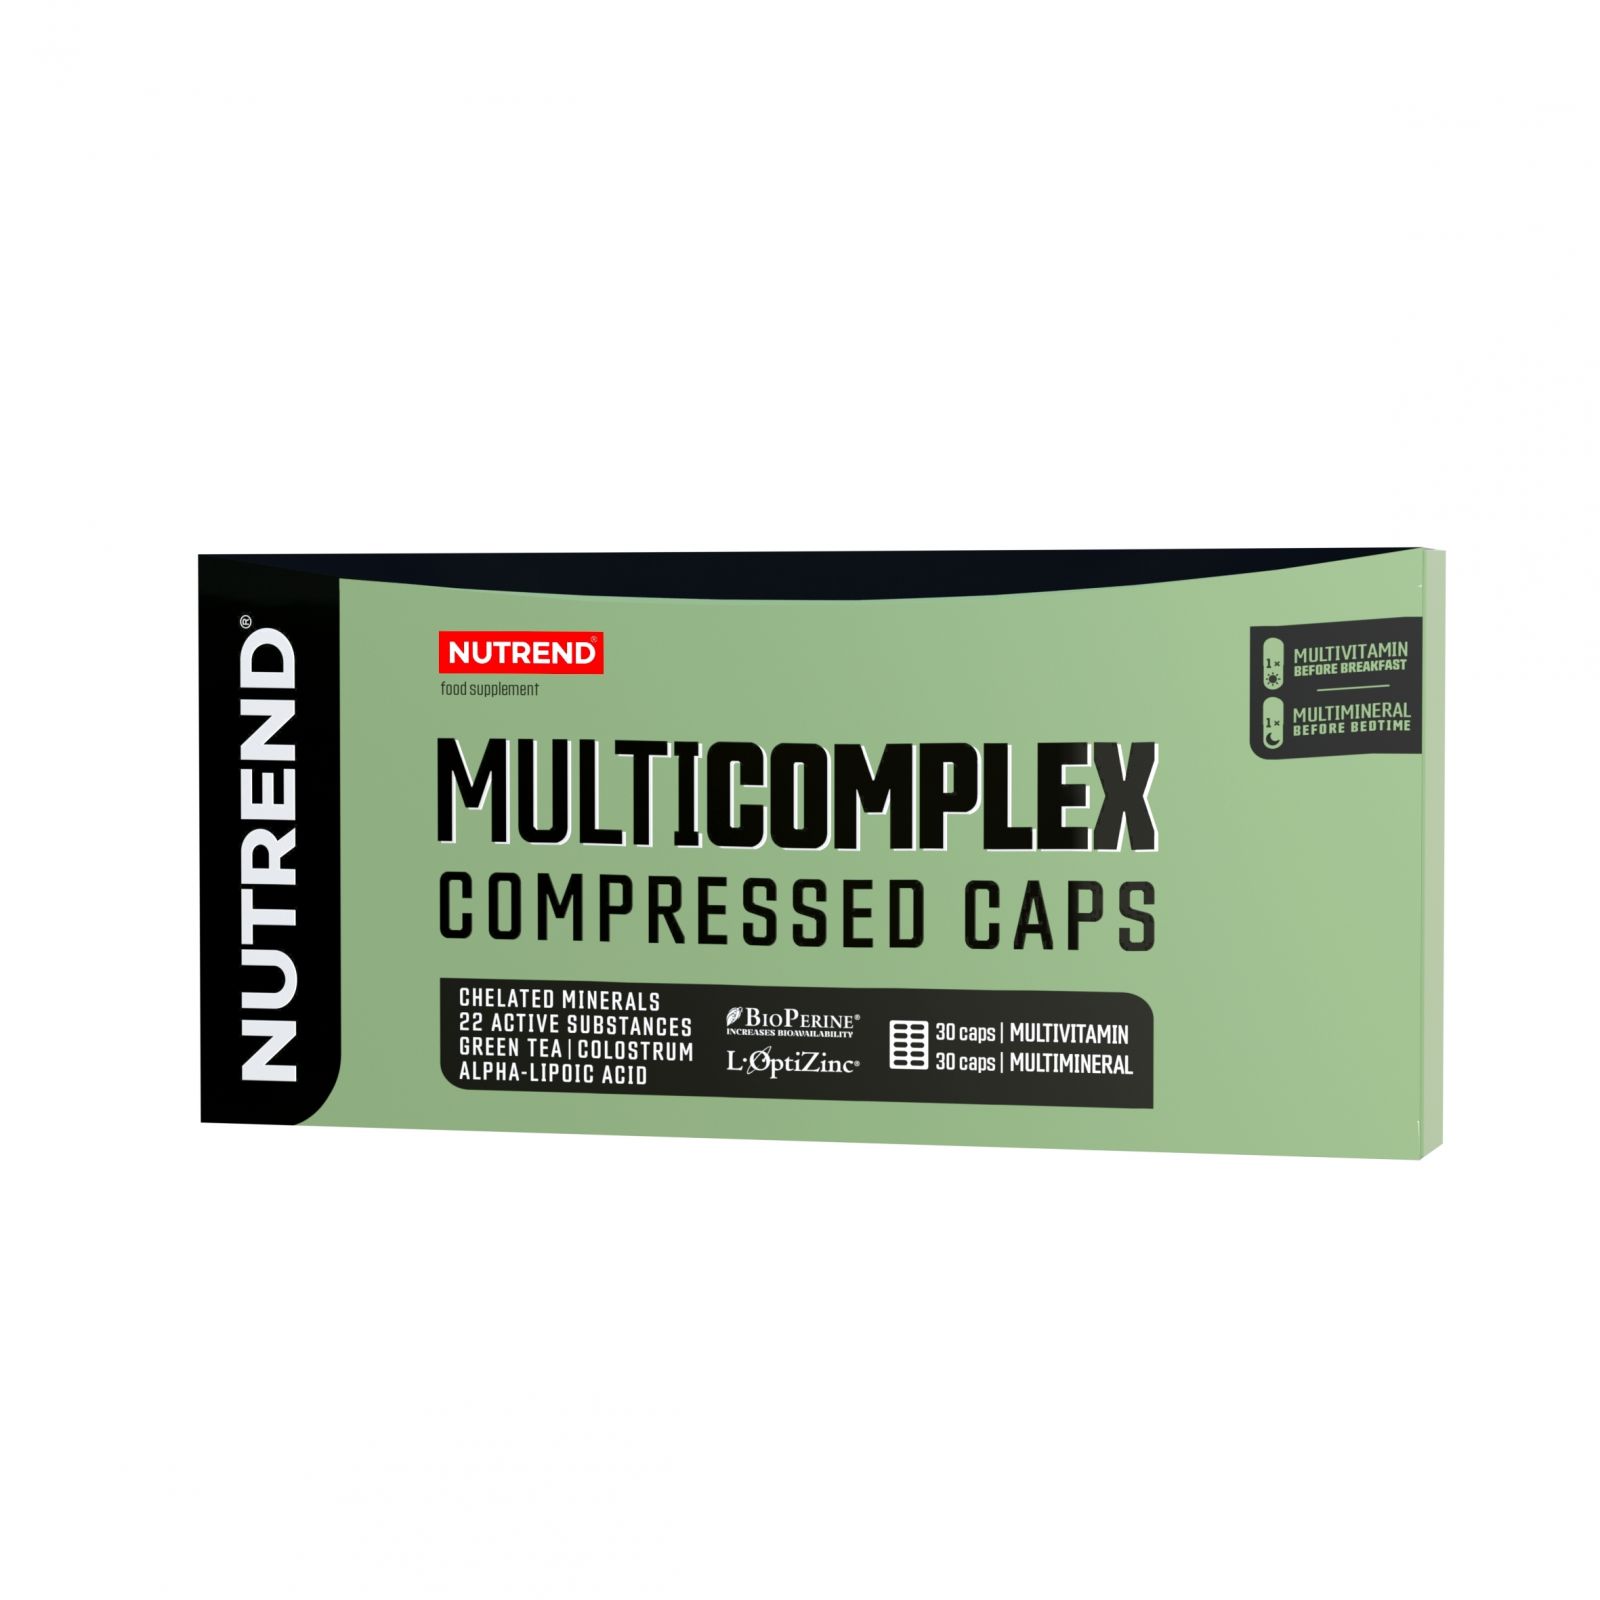 MULTICOMPLEX COMPRESSED CAPS, obsahuje 60 kapslí NUTREND